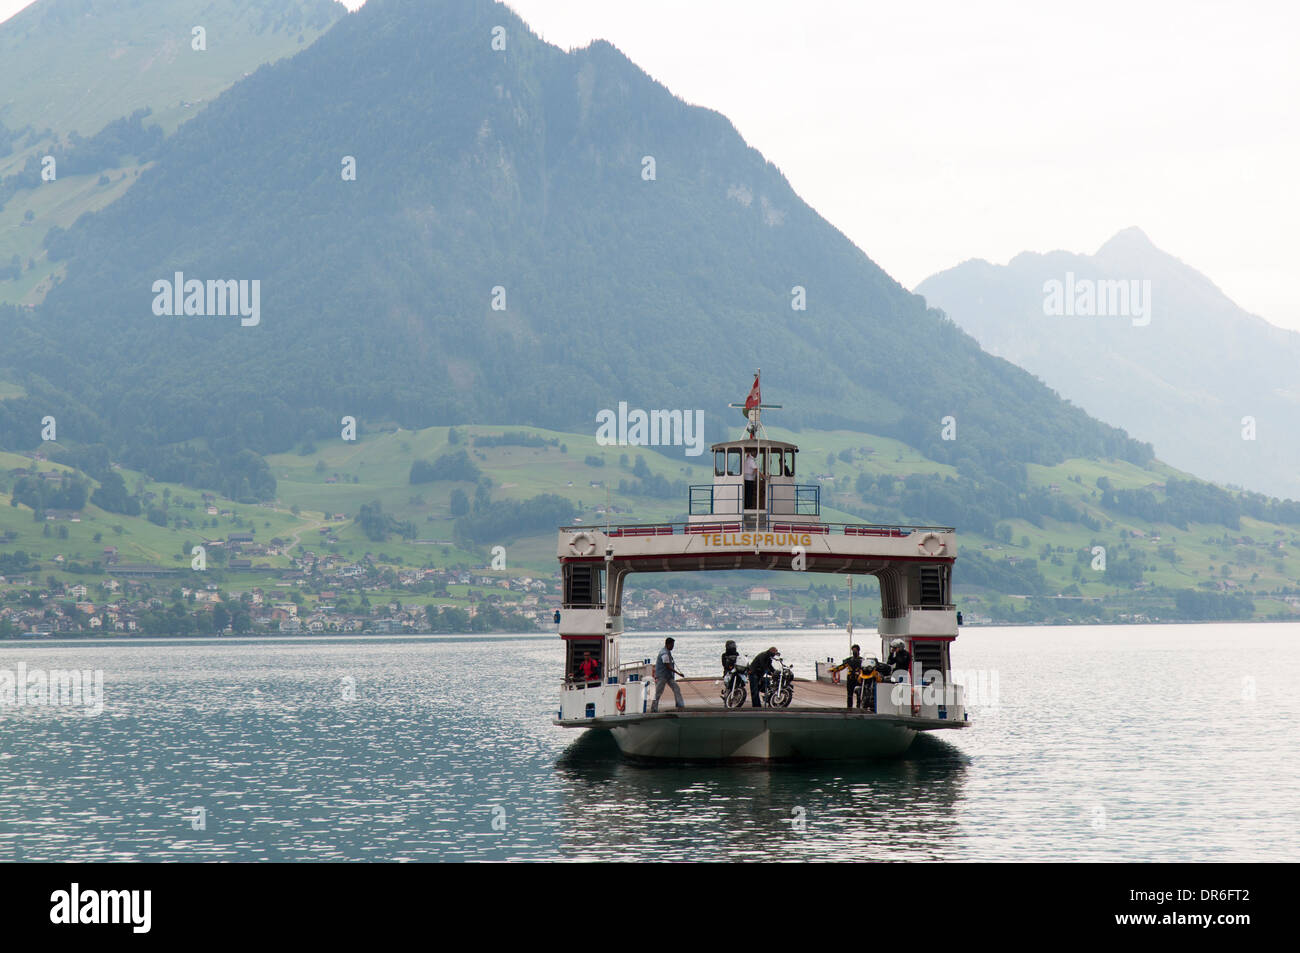 Ferry 'Tellsprung' across Lake Lucerne (Vierwaldstättersee) between Gersau and Beckenried in the Swiss Alps Stock Photo